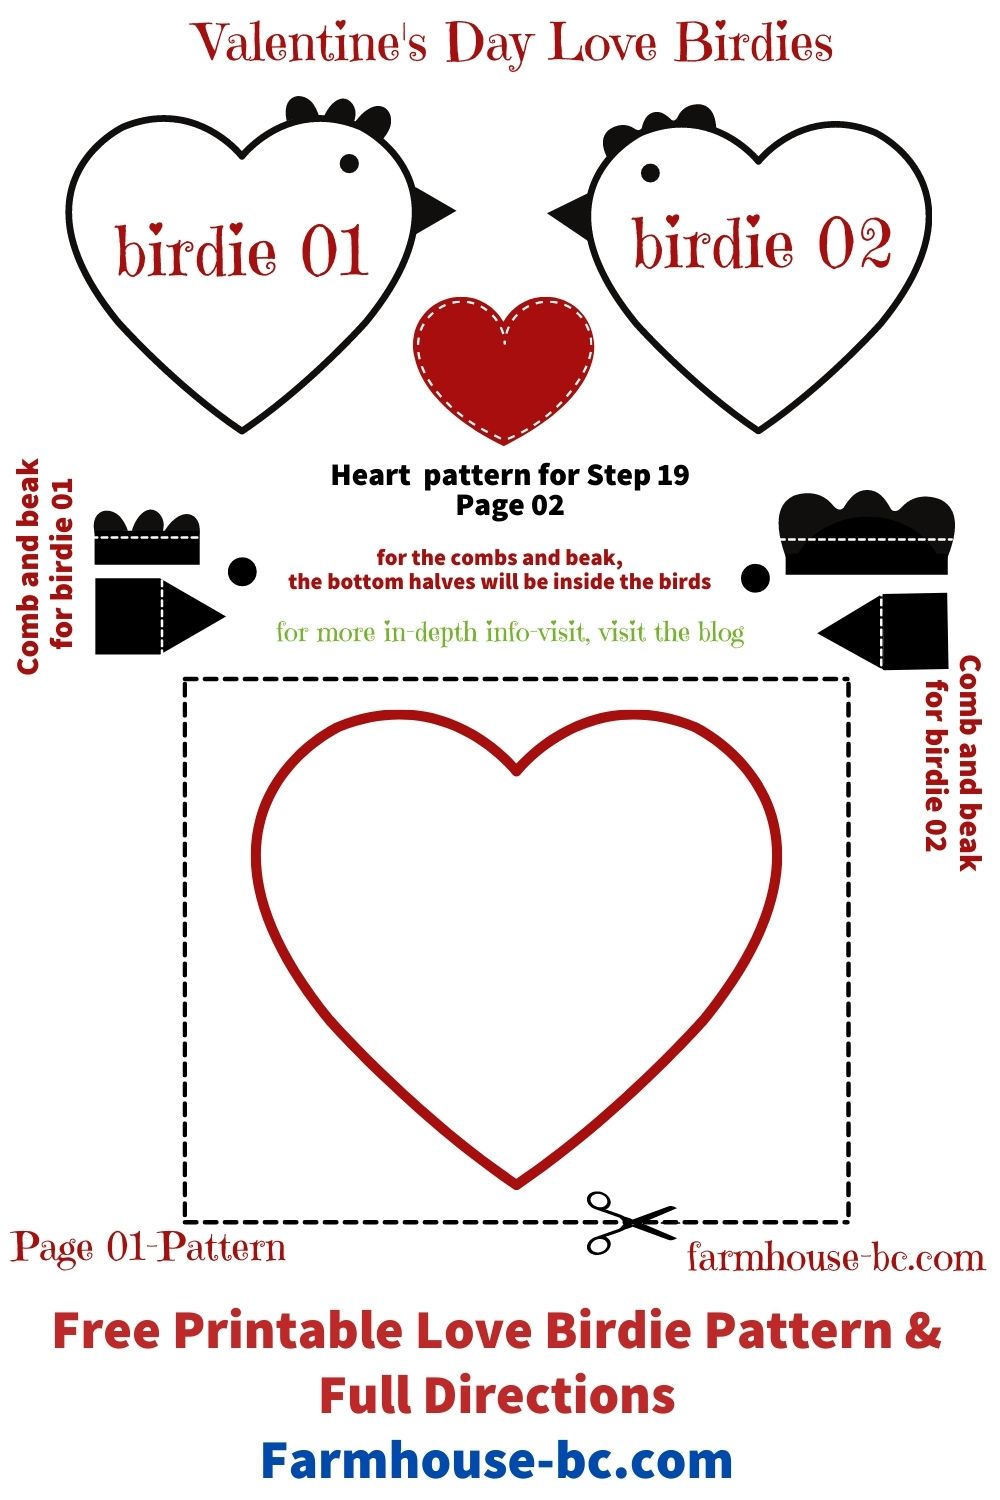 Free Love Bird Craft Pattern for Valentine's Day or all-year-round.